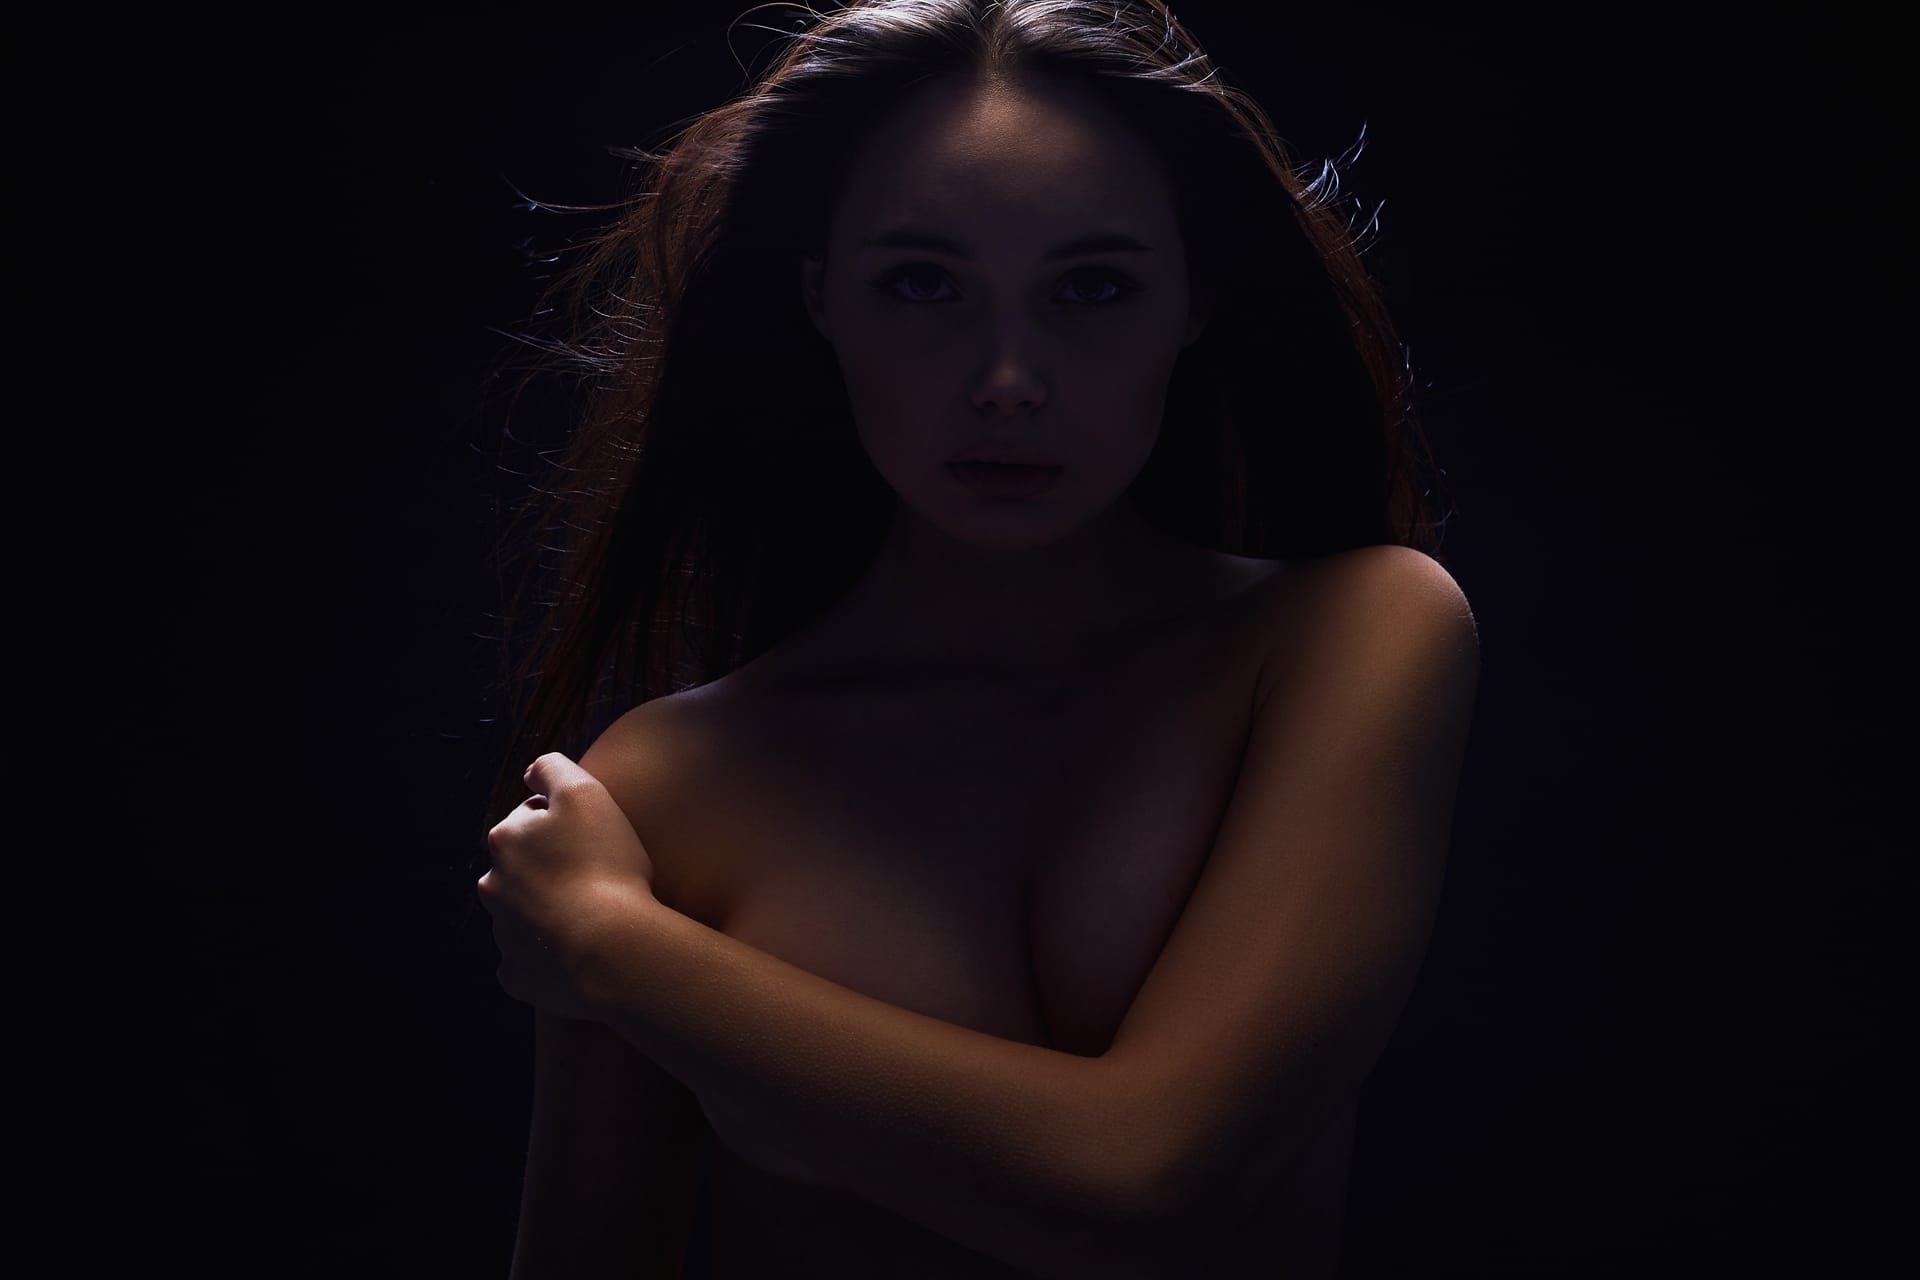 Nude woman female silhouette beautiful naked body girl